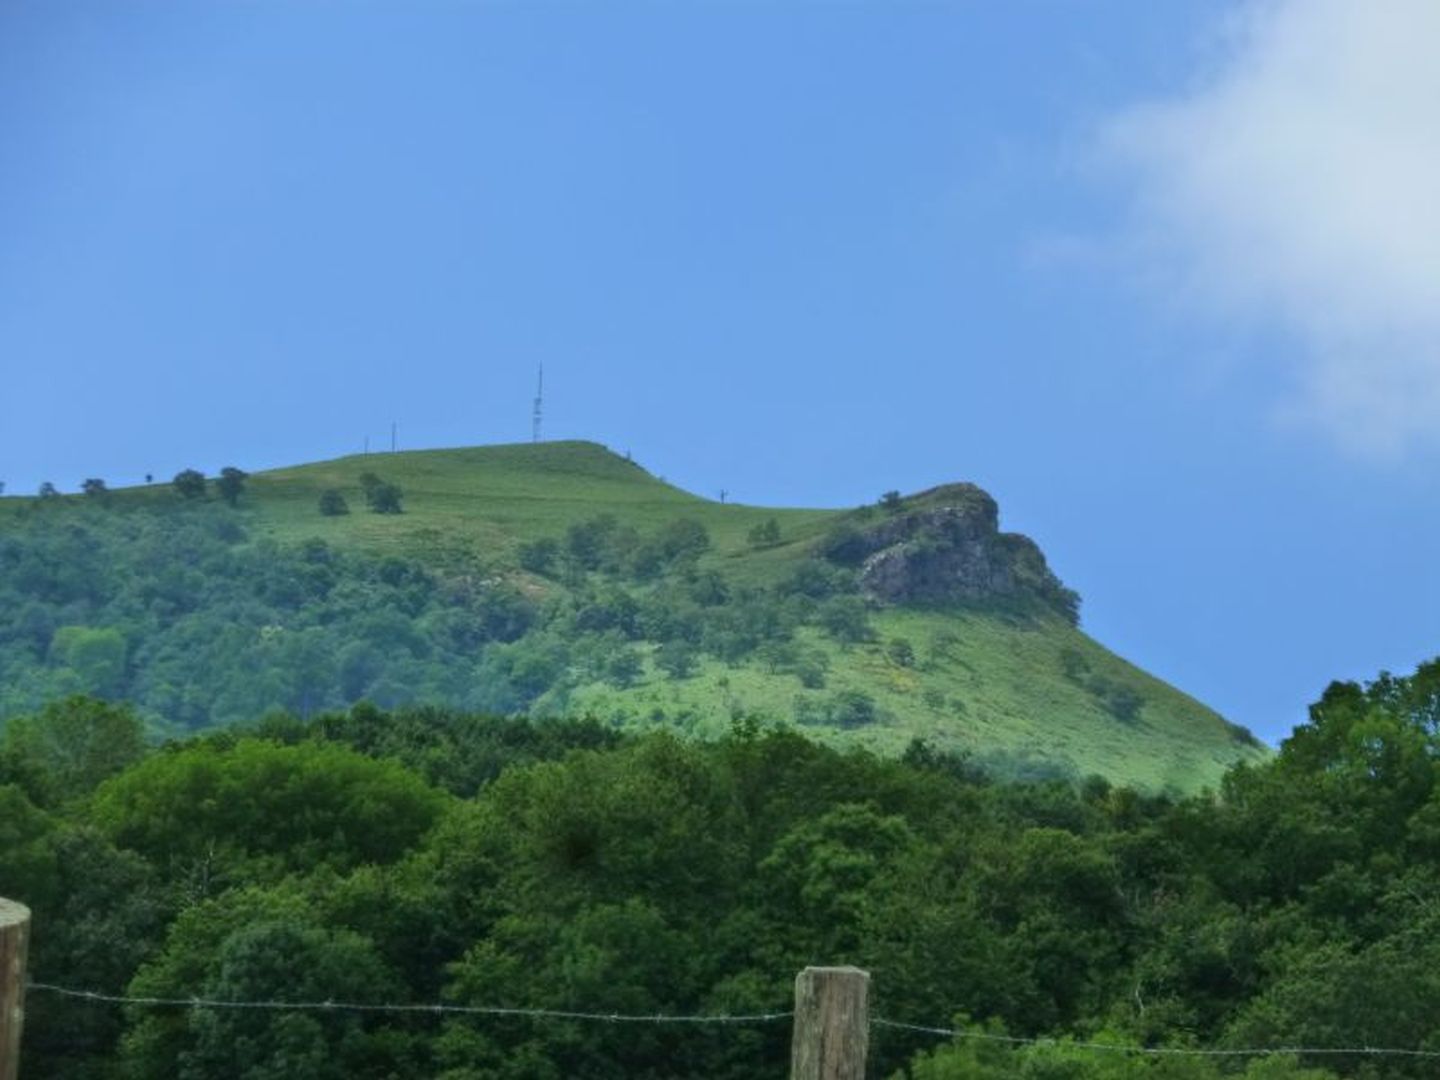 Location Erramoun - Ametzaldia RDC - Vue montagne - Irouléguy 